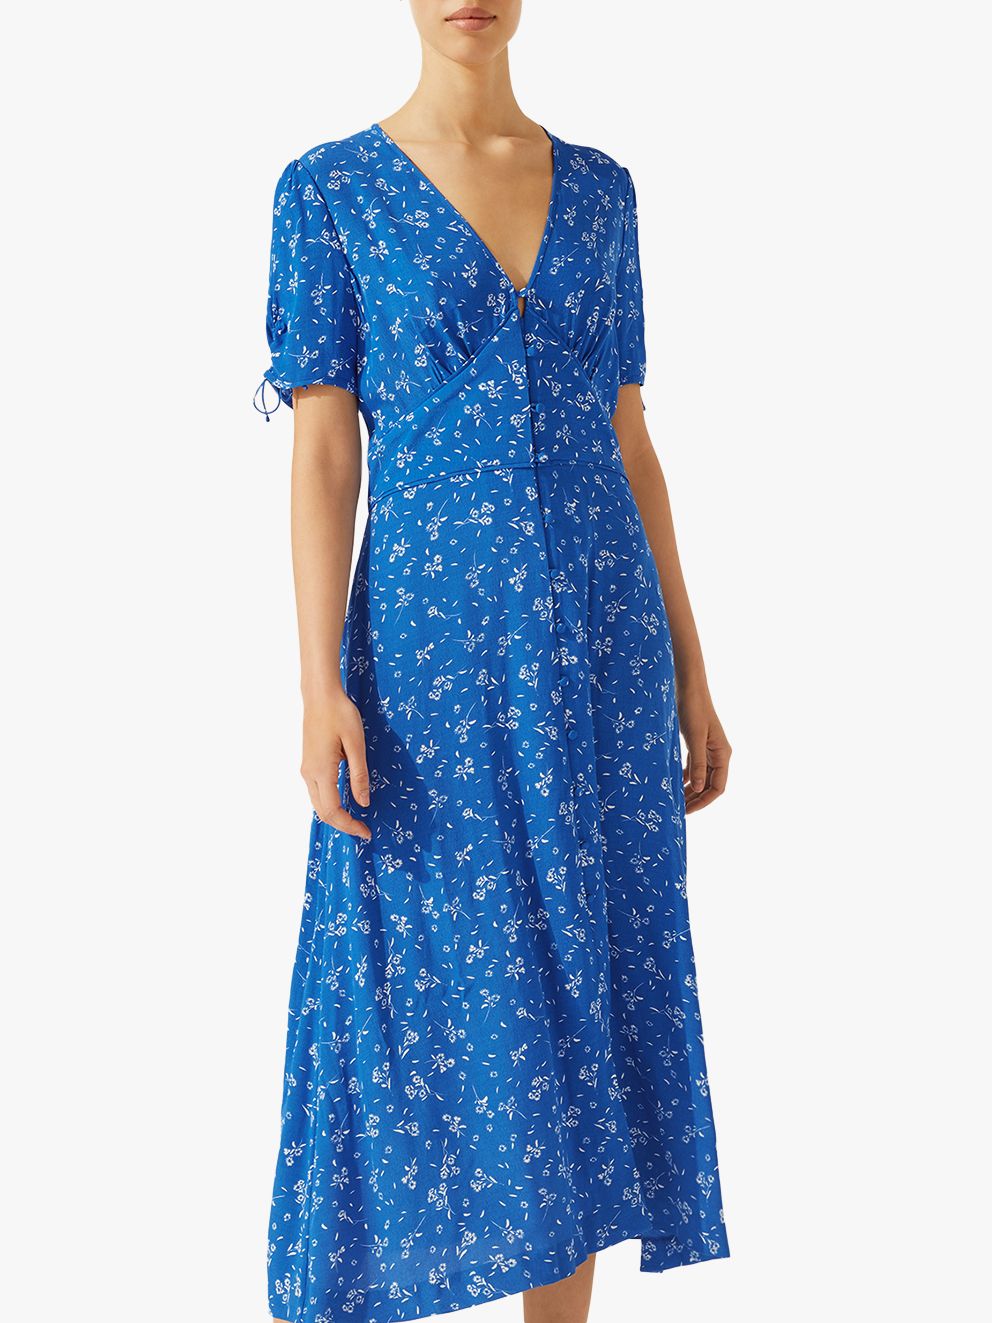 blue tea dress